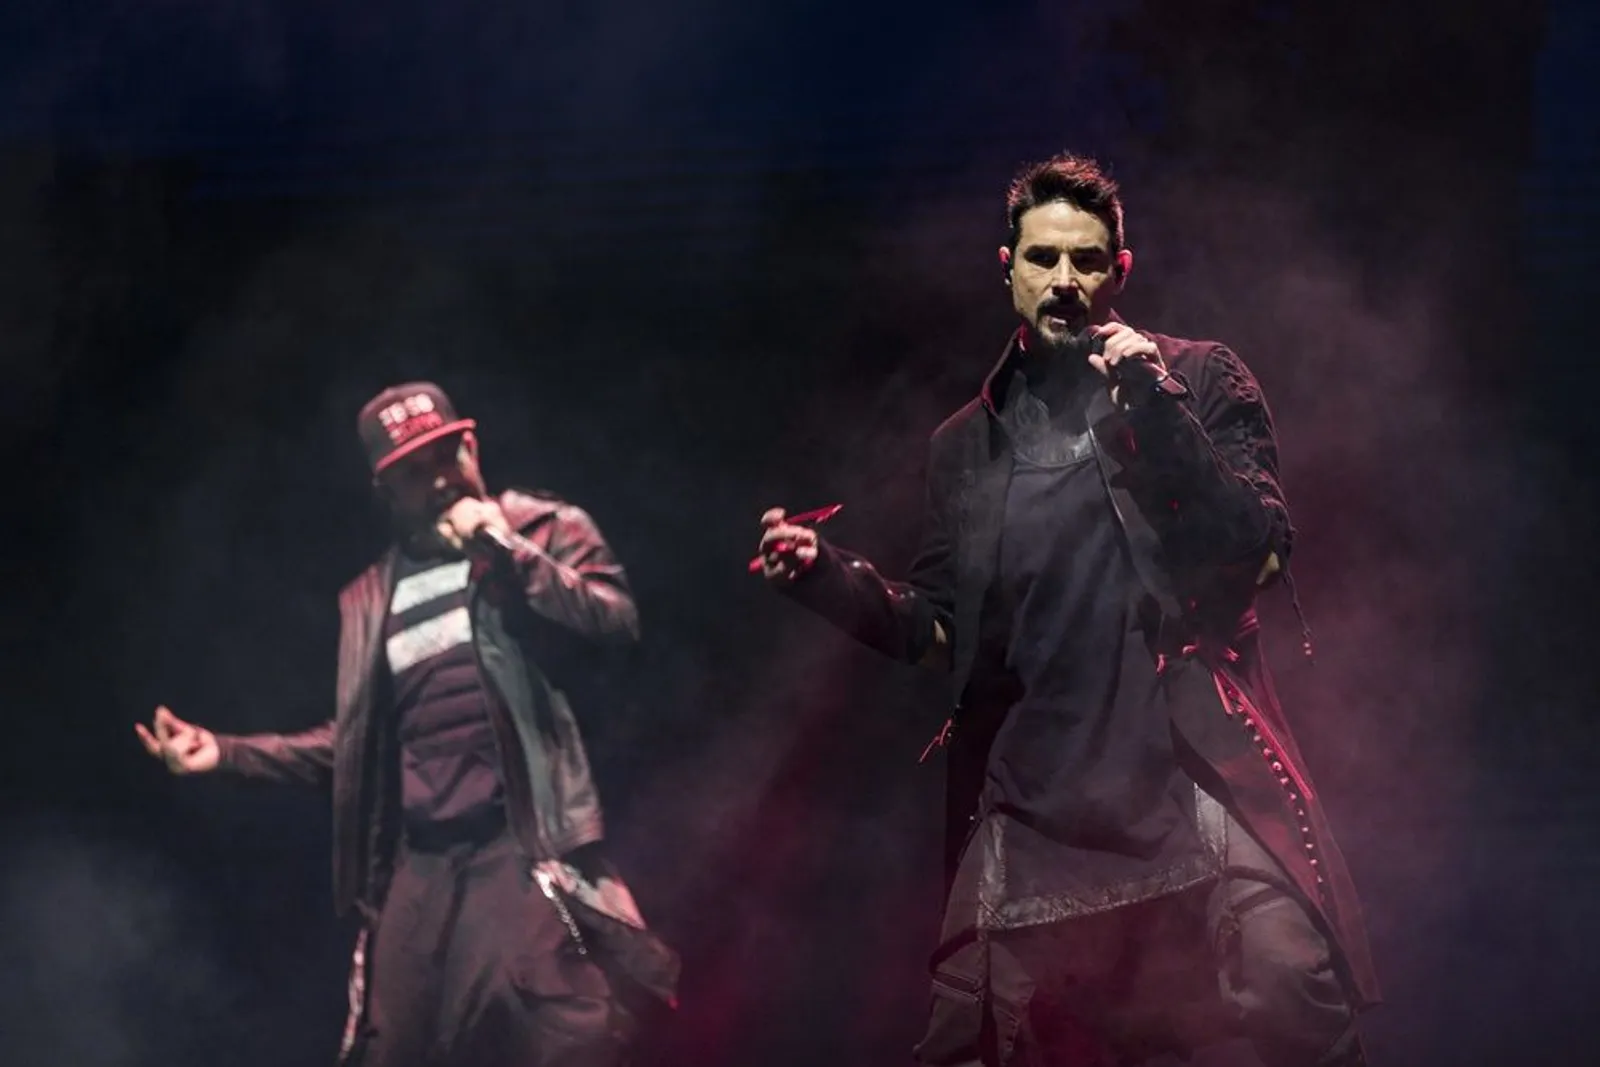 Lempar Baju Saat Konser, Backstreet Boys Sukses Bikin Histeris